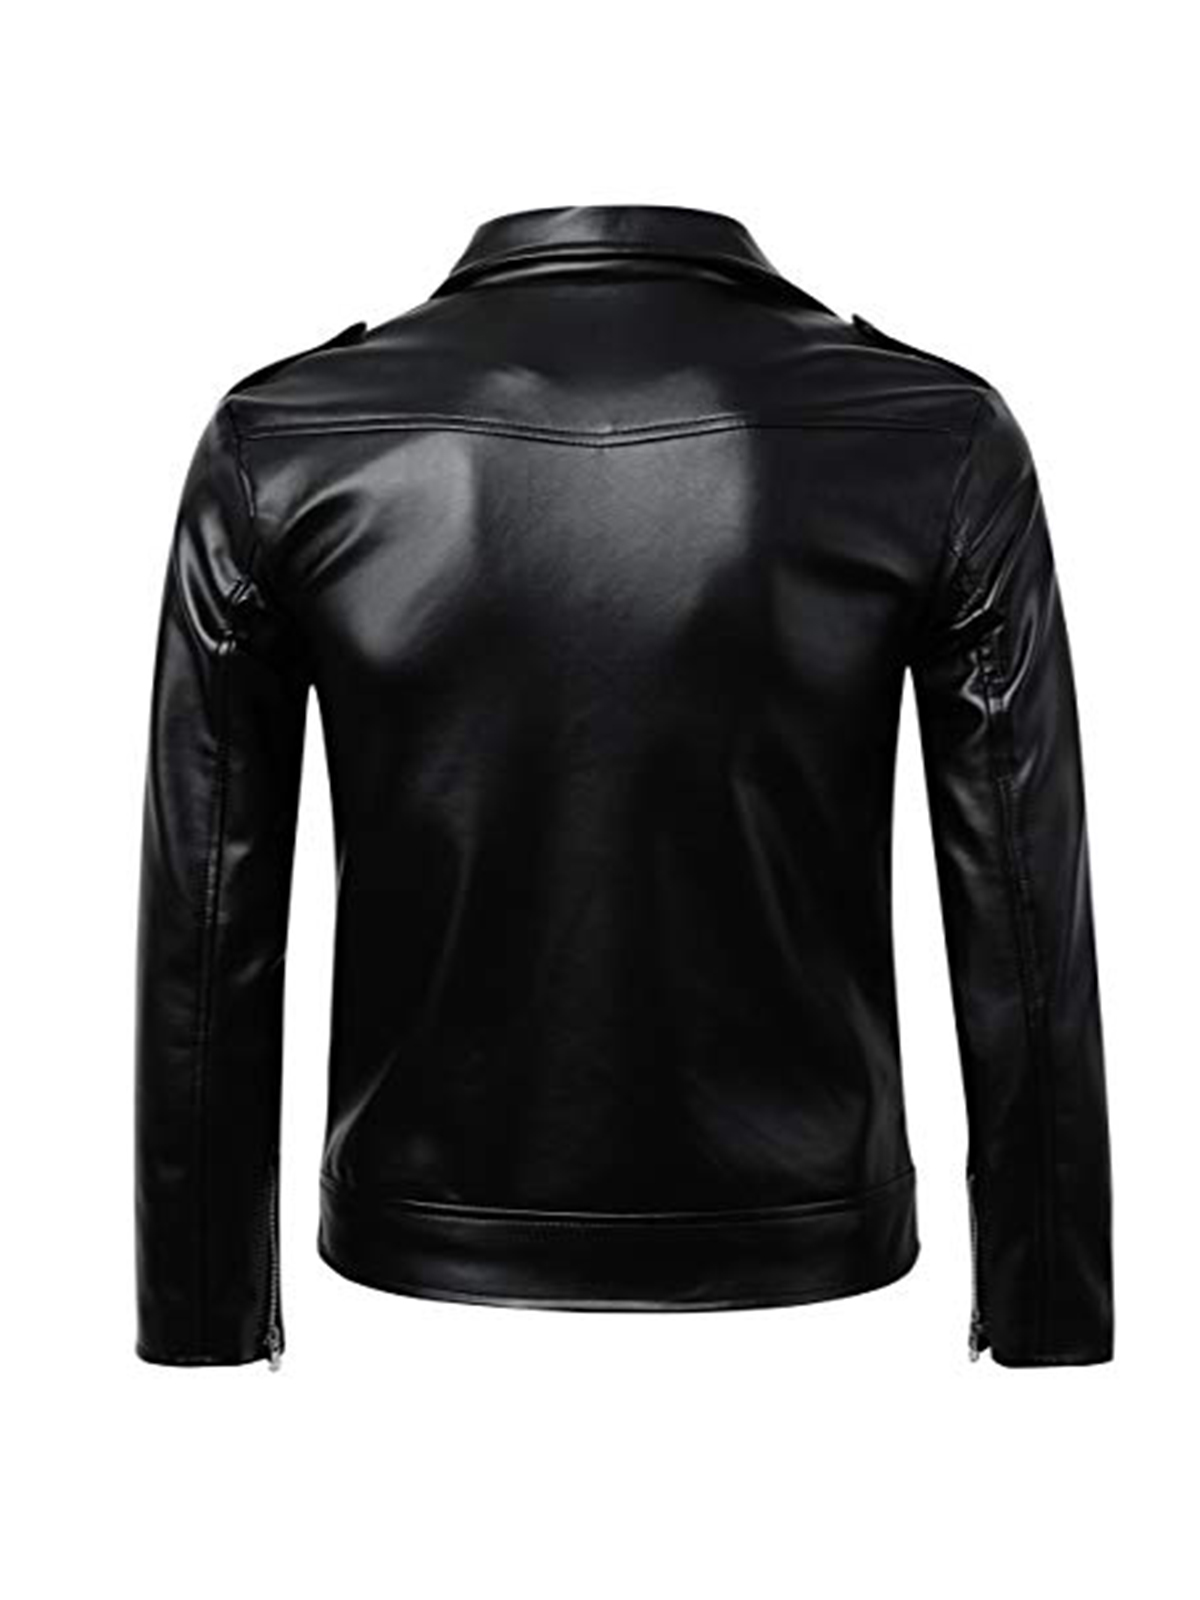 Men’s Classic Black Genuine Leather Motorcycle Jacket